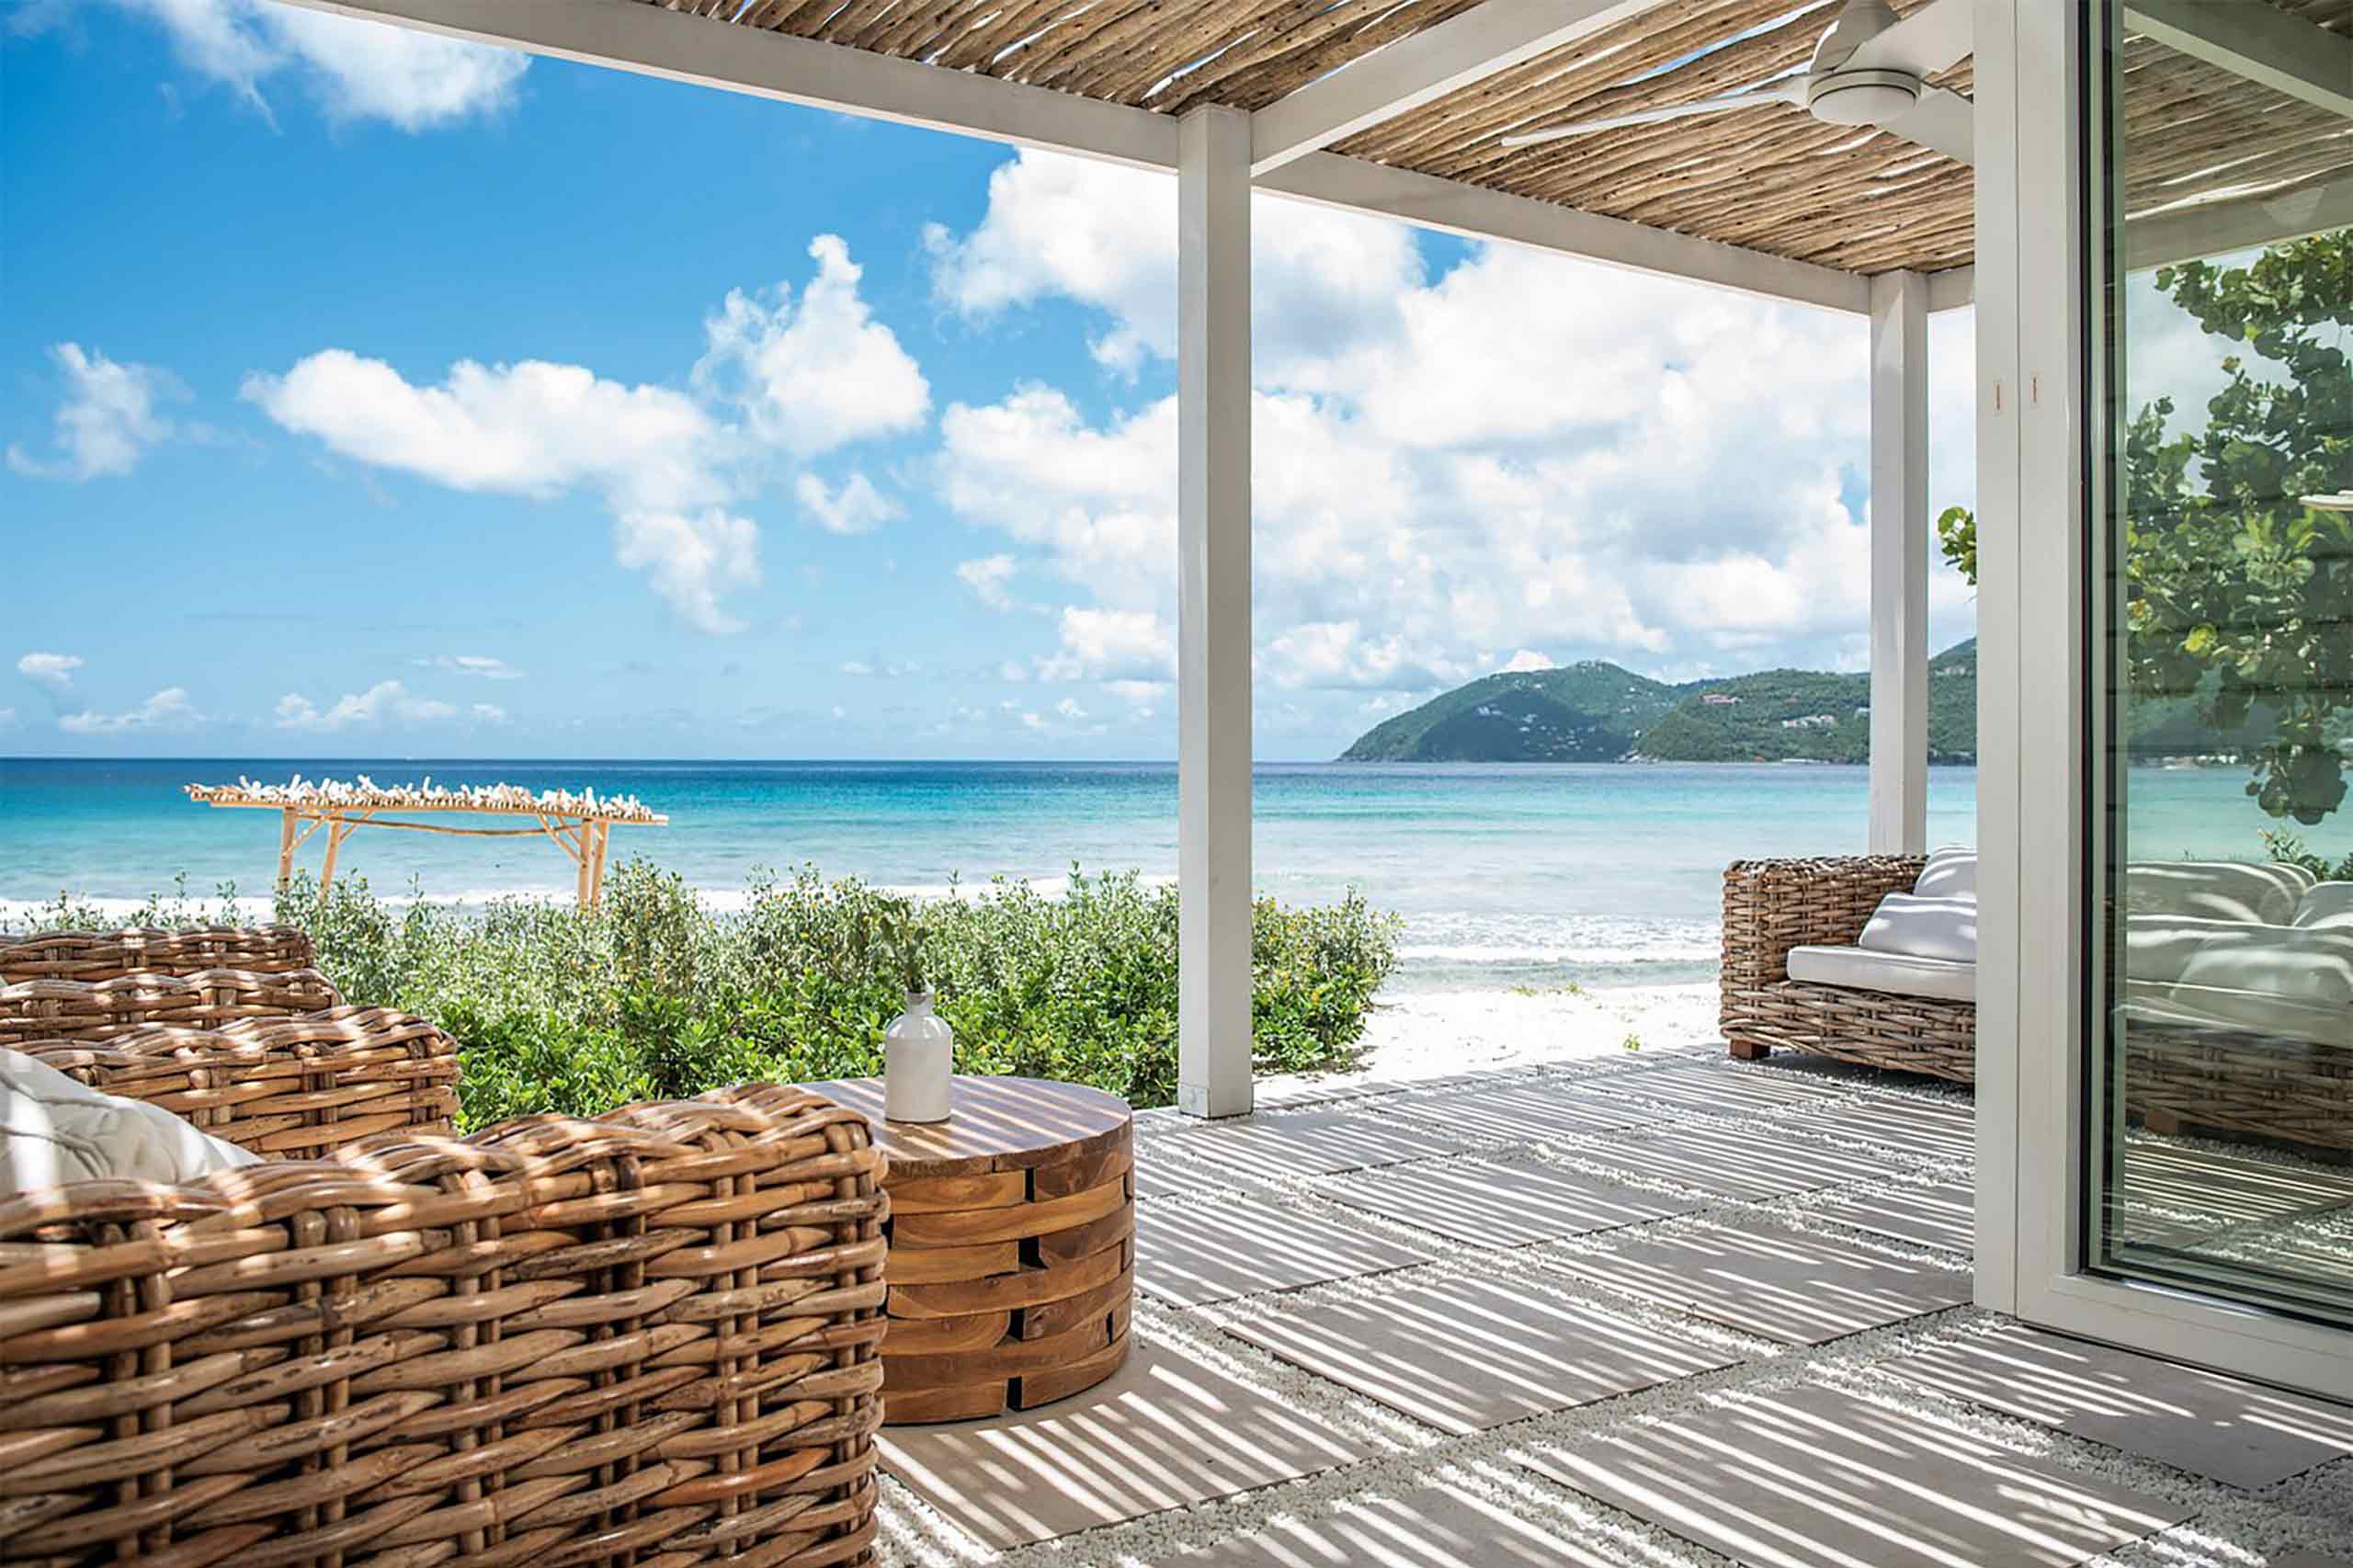 View of the sea from Long Bay Beach Resort, Tortola, British Virgin Islands